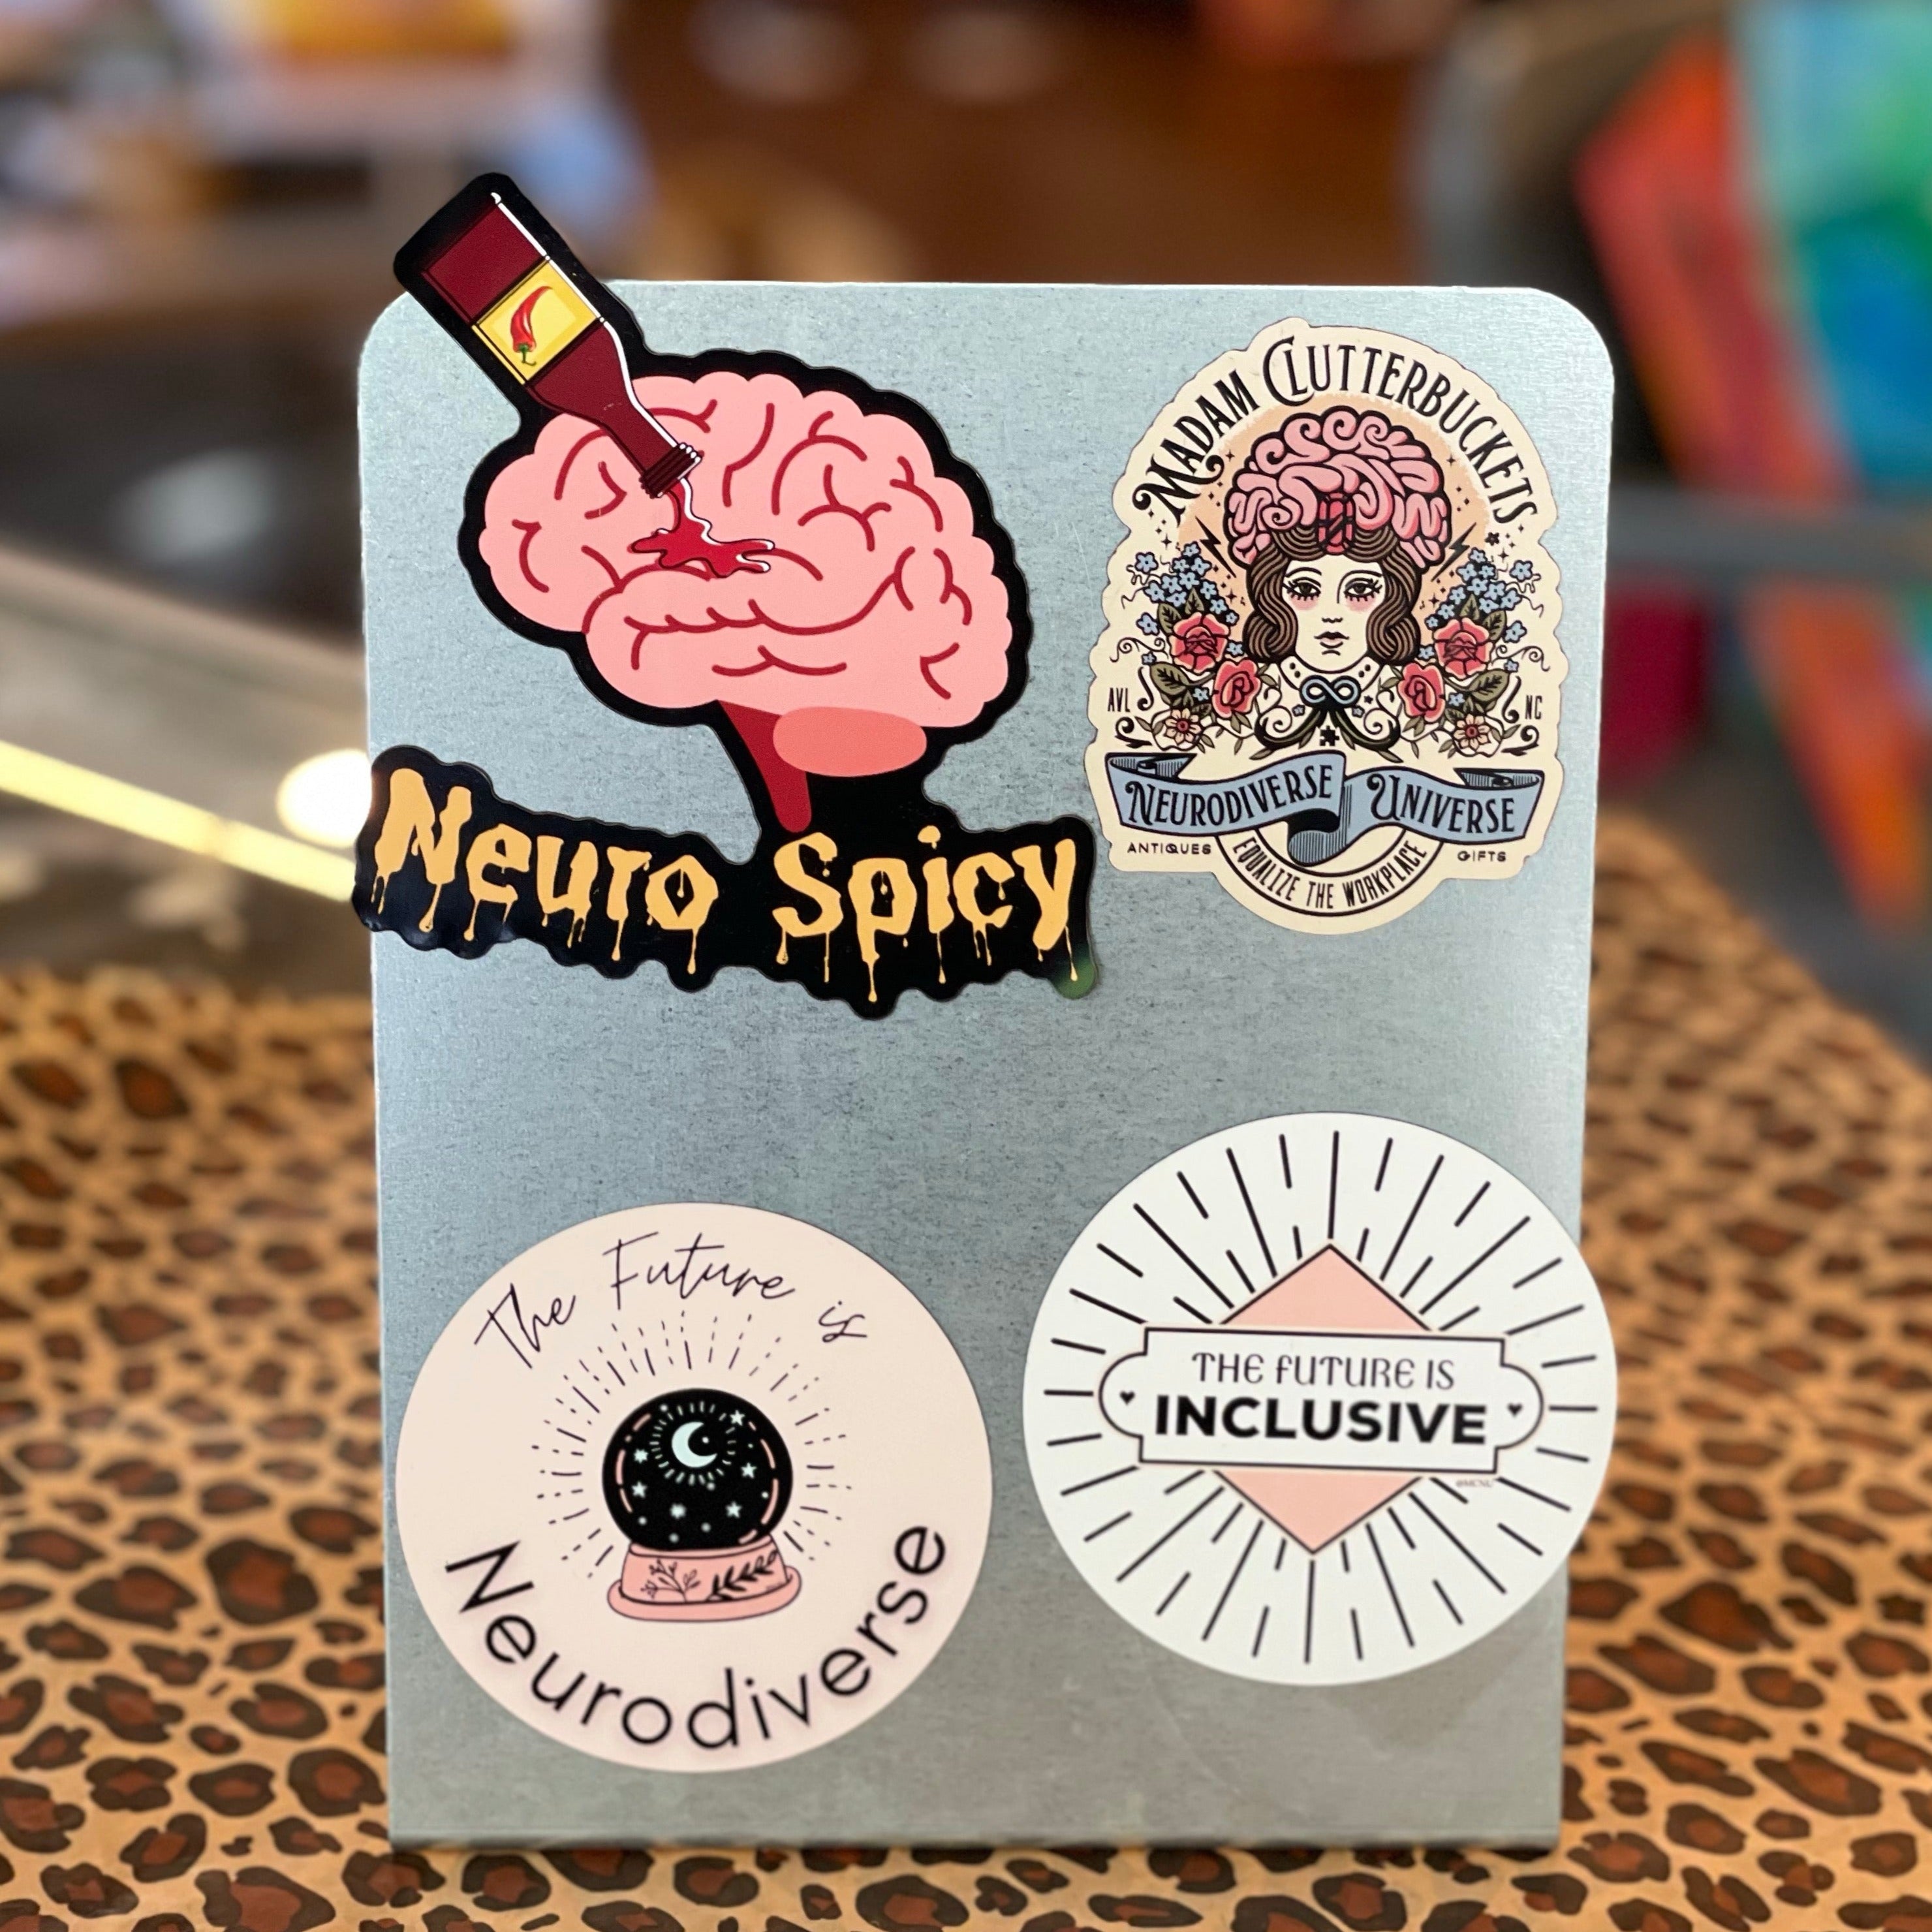 Neuro Spicy Magnet!